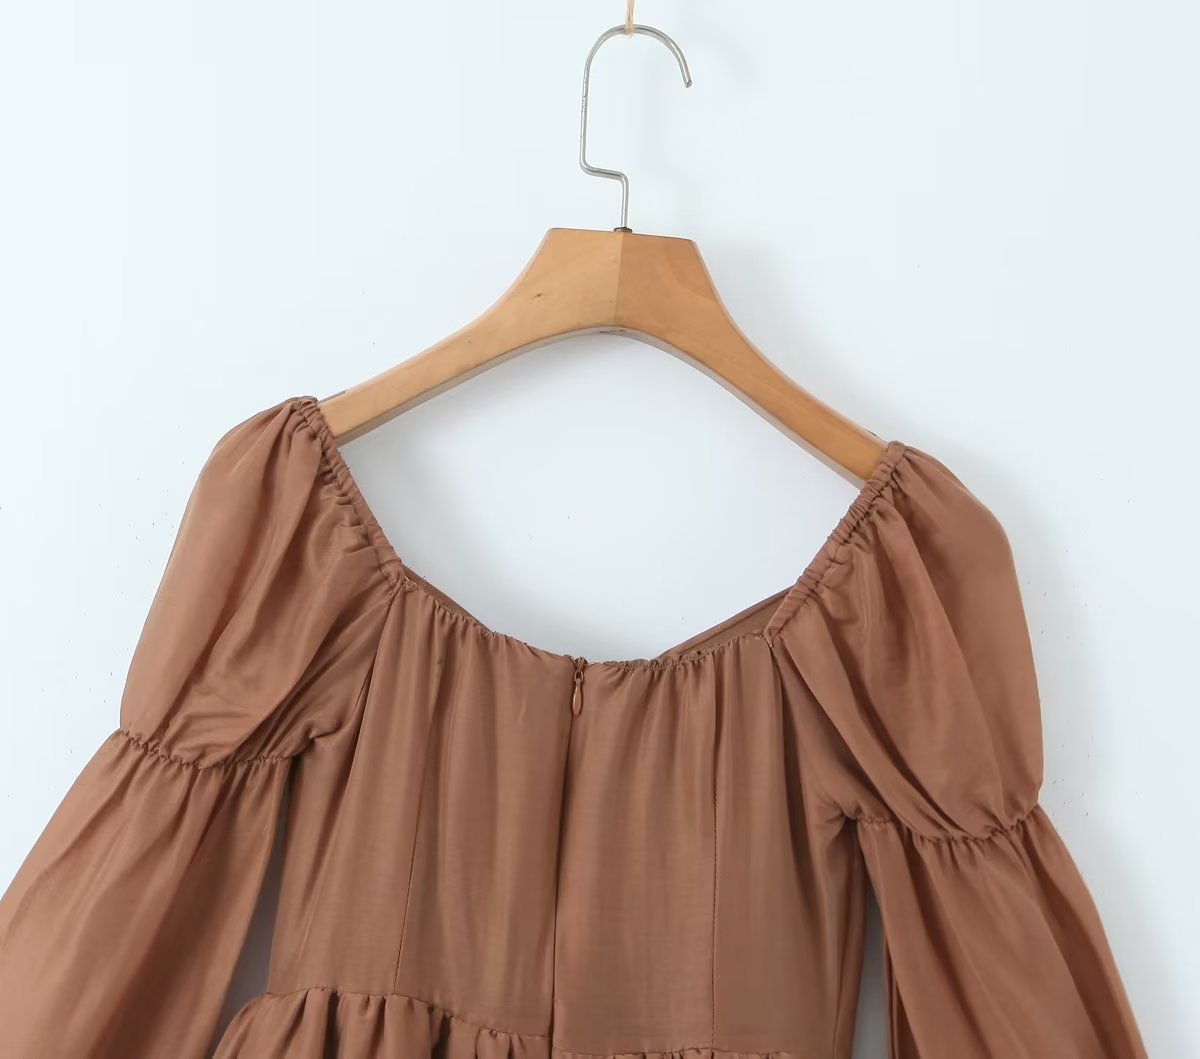 2023 Fashion Trends | Black Floral Brown Aesthetic Ruffles Mini Dress